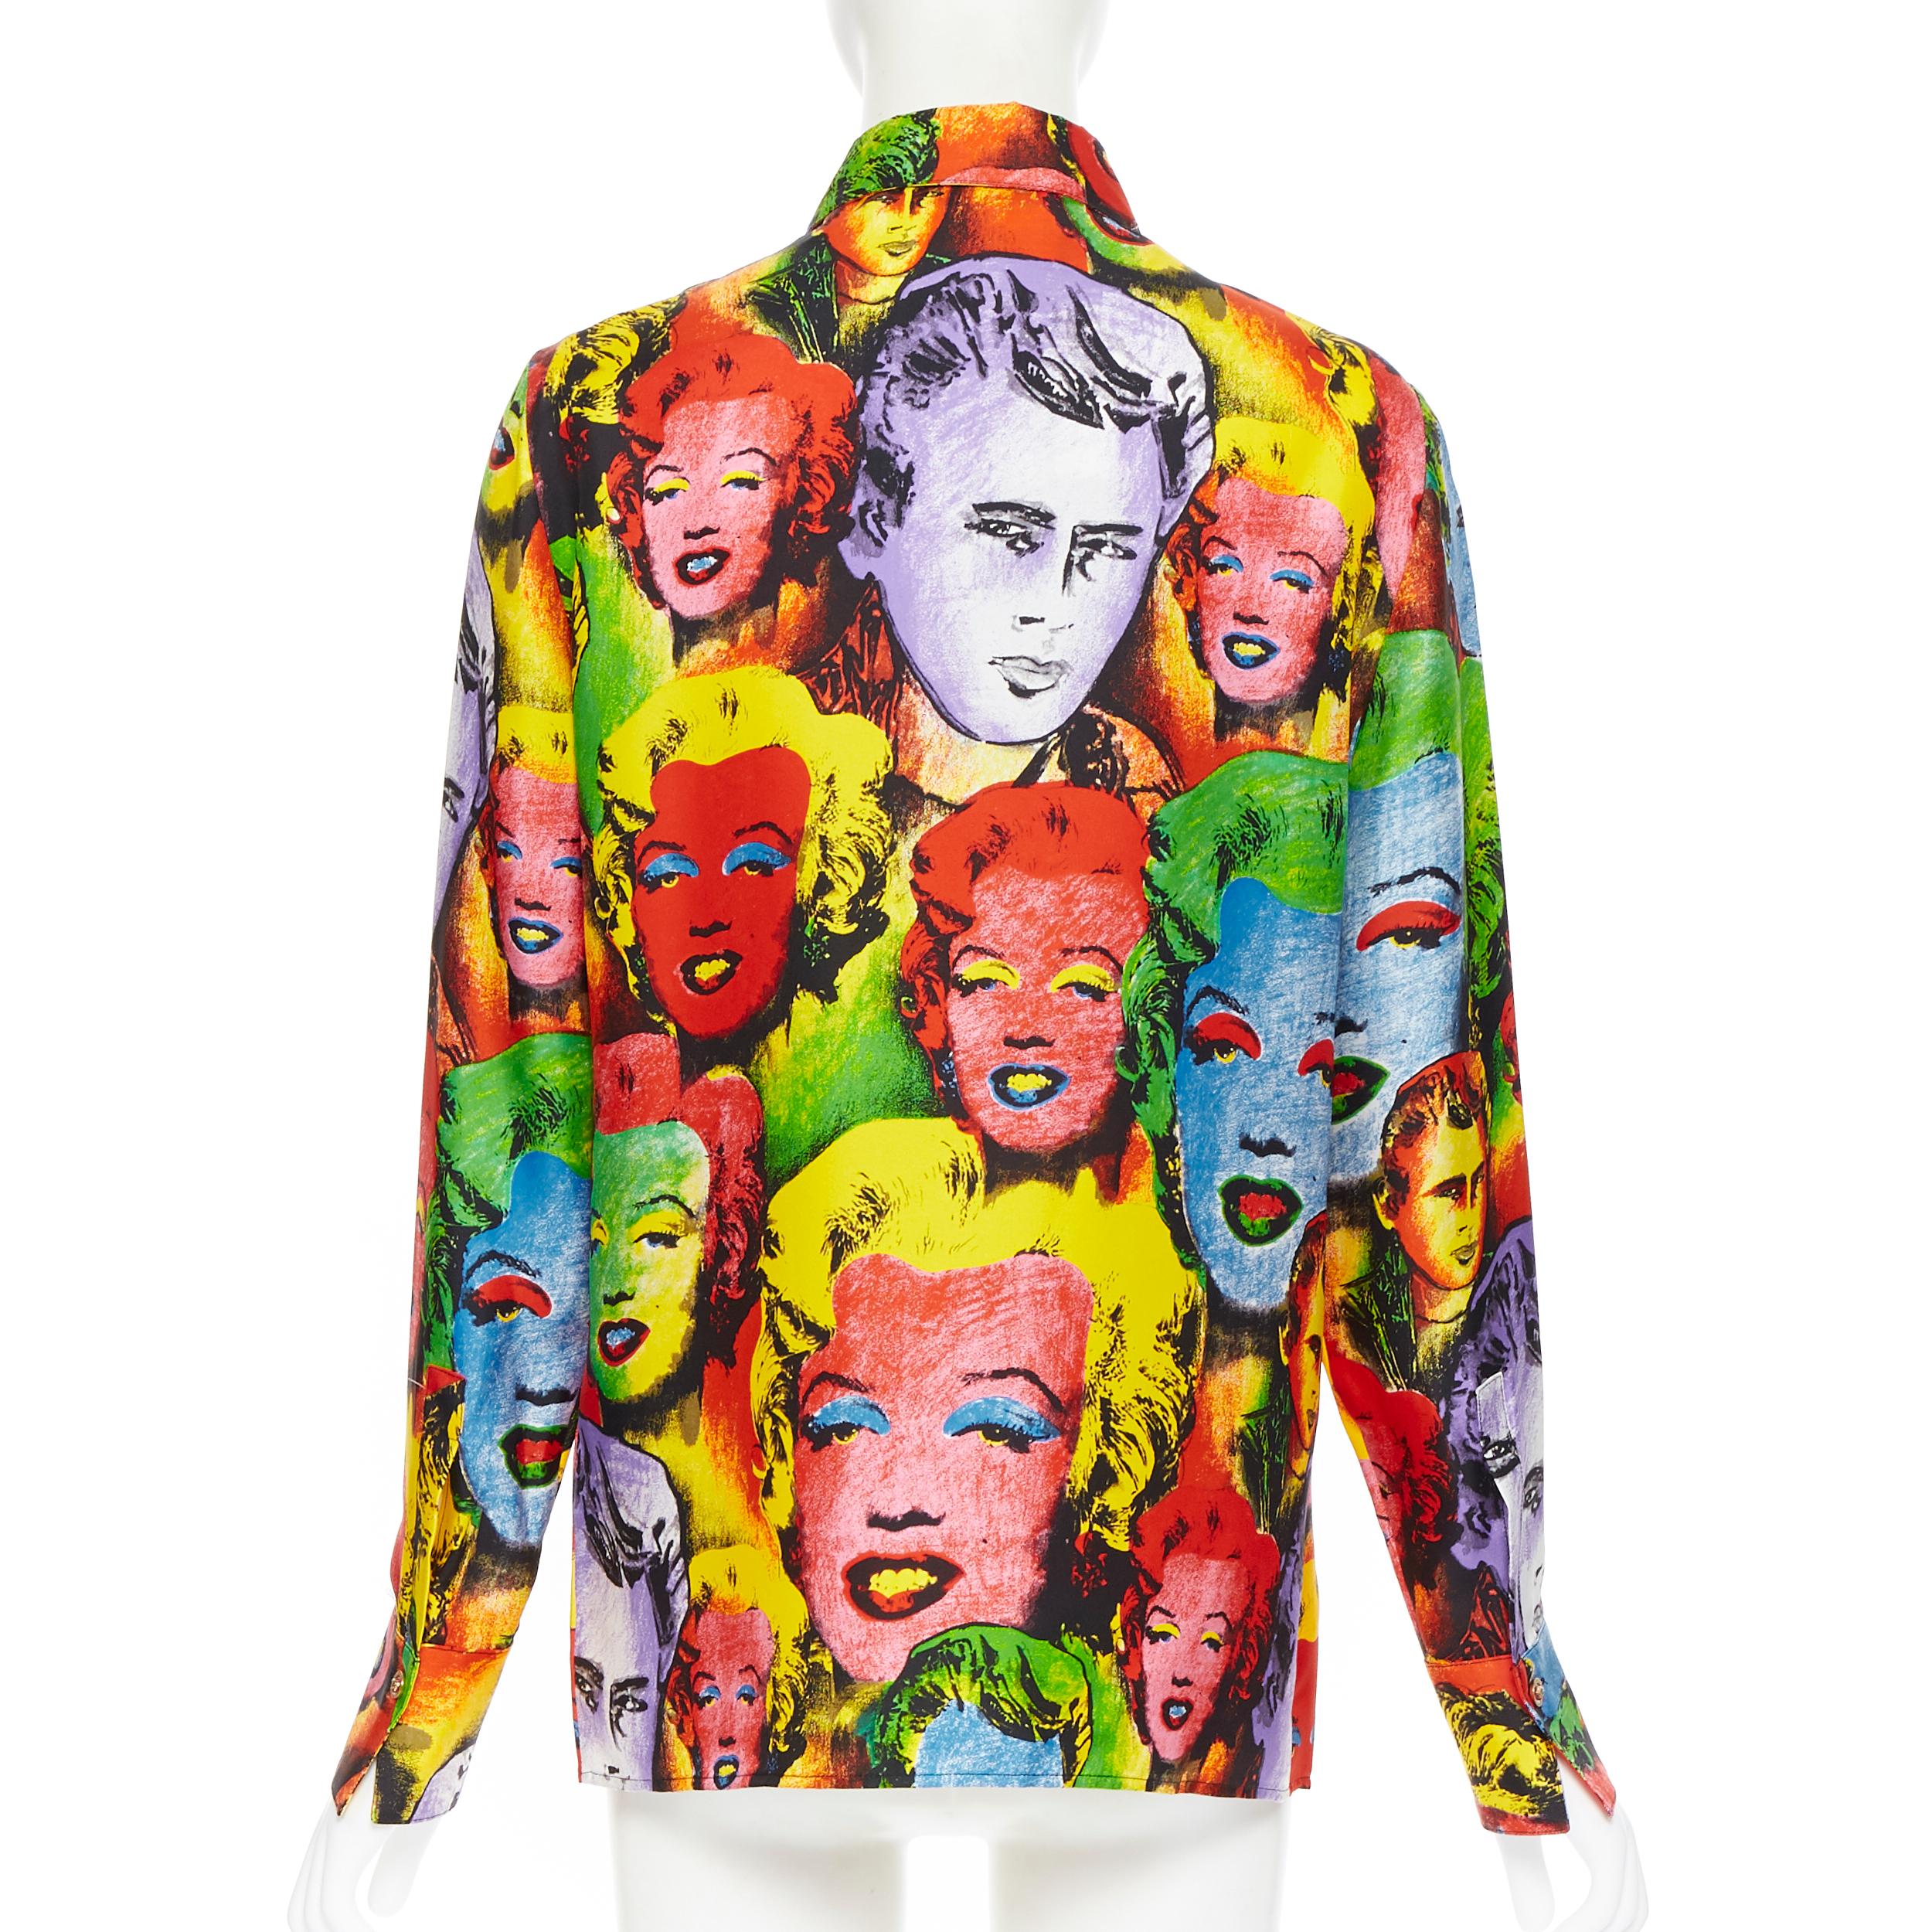 Beige new VERSACE SS18 Runway Tribute pop art Marilyn Monroe James Dean shirt IT44 L